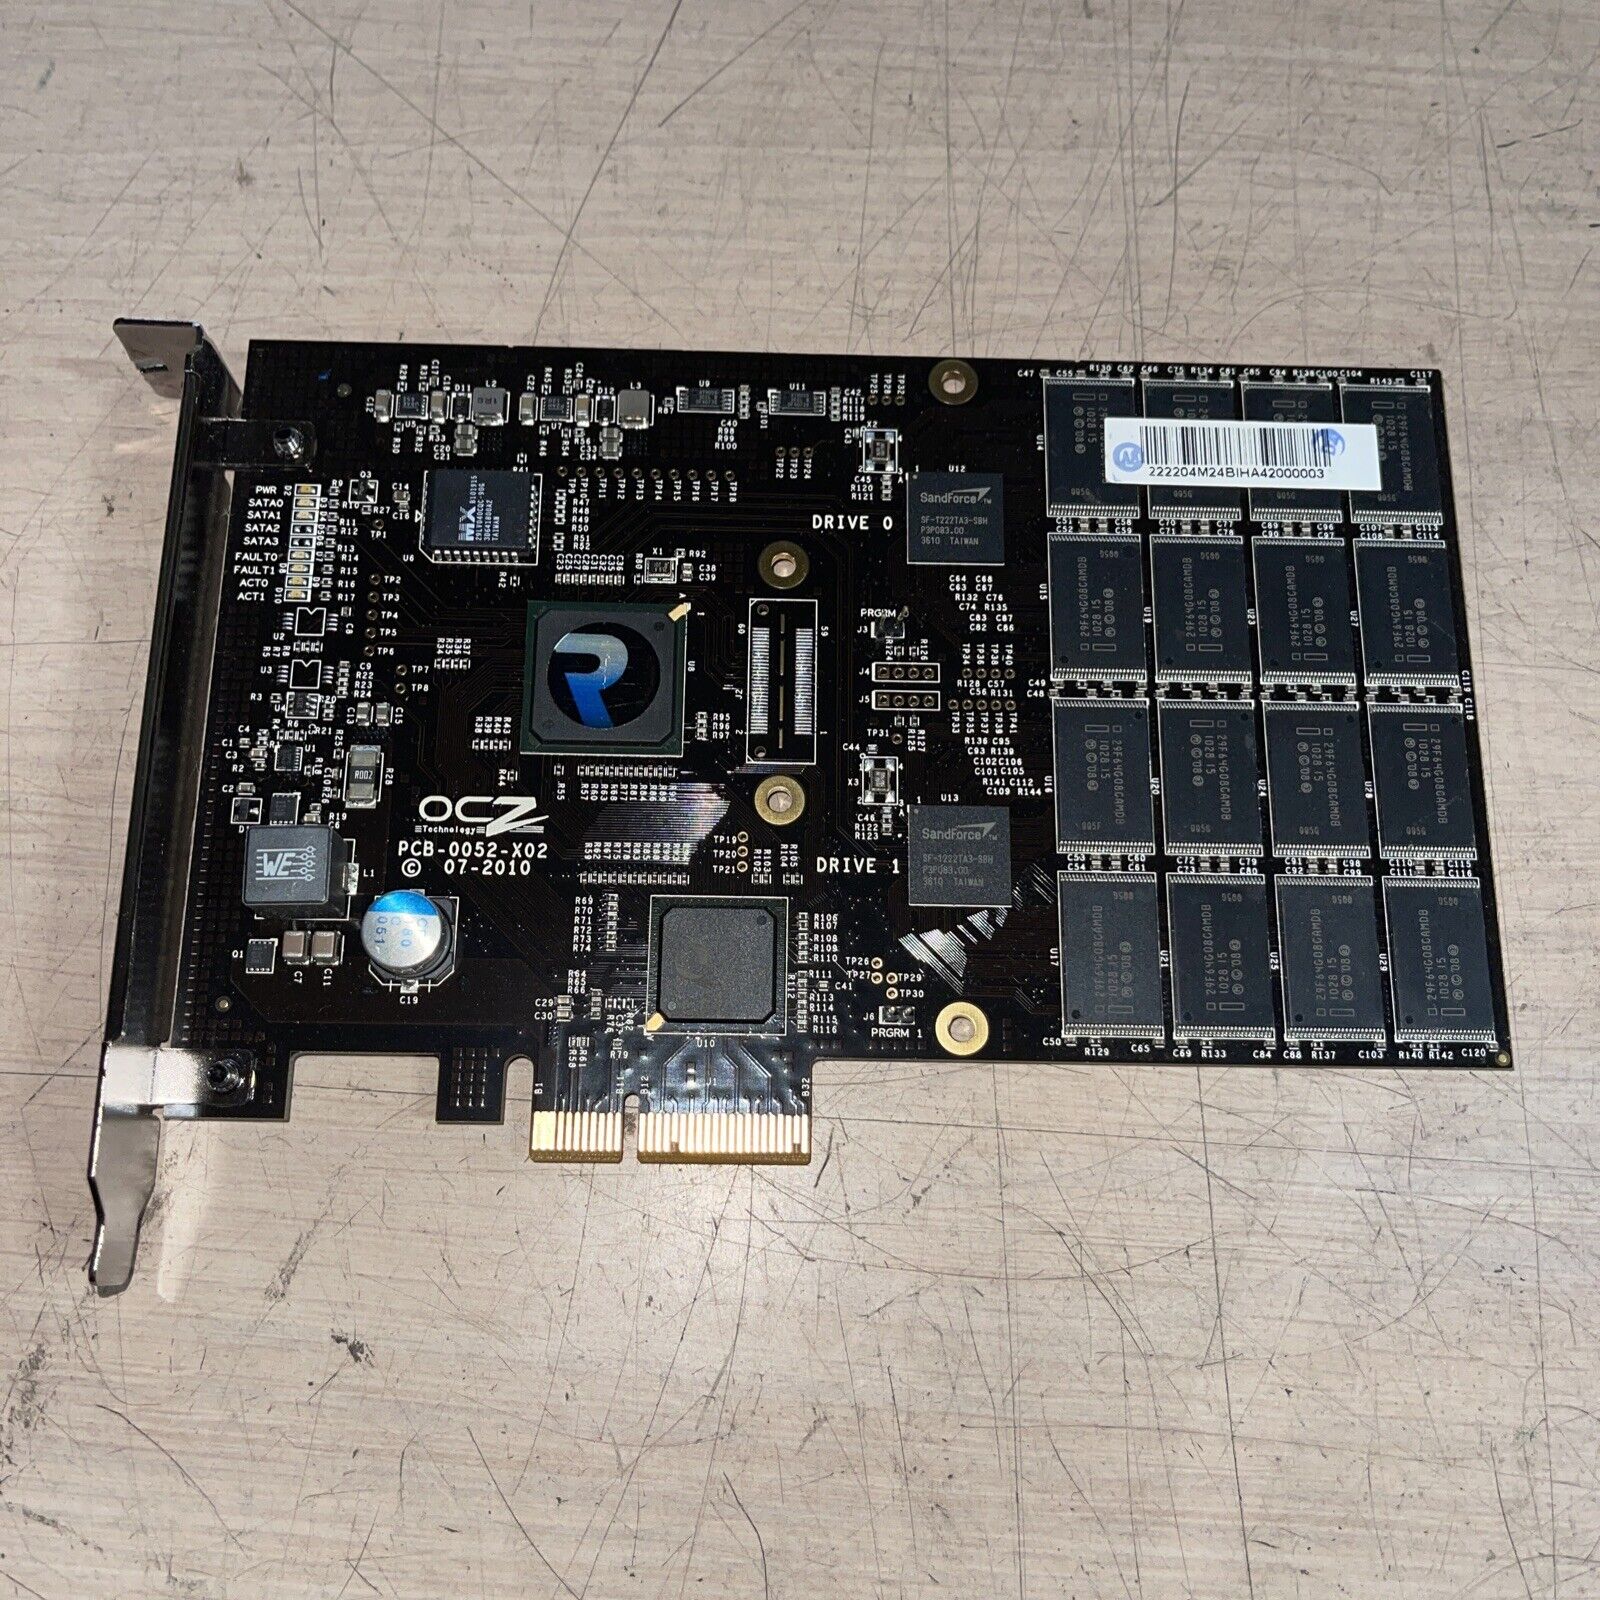 OCZ PCB-0052-x02 OCZSSDPX-1RVDX0240 Revo Drive 240GB PCI-E SSD Card